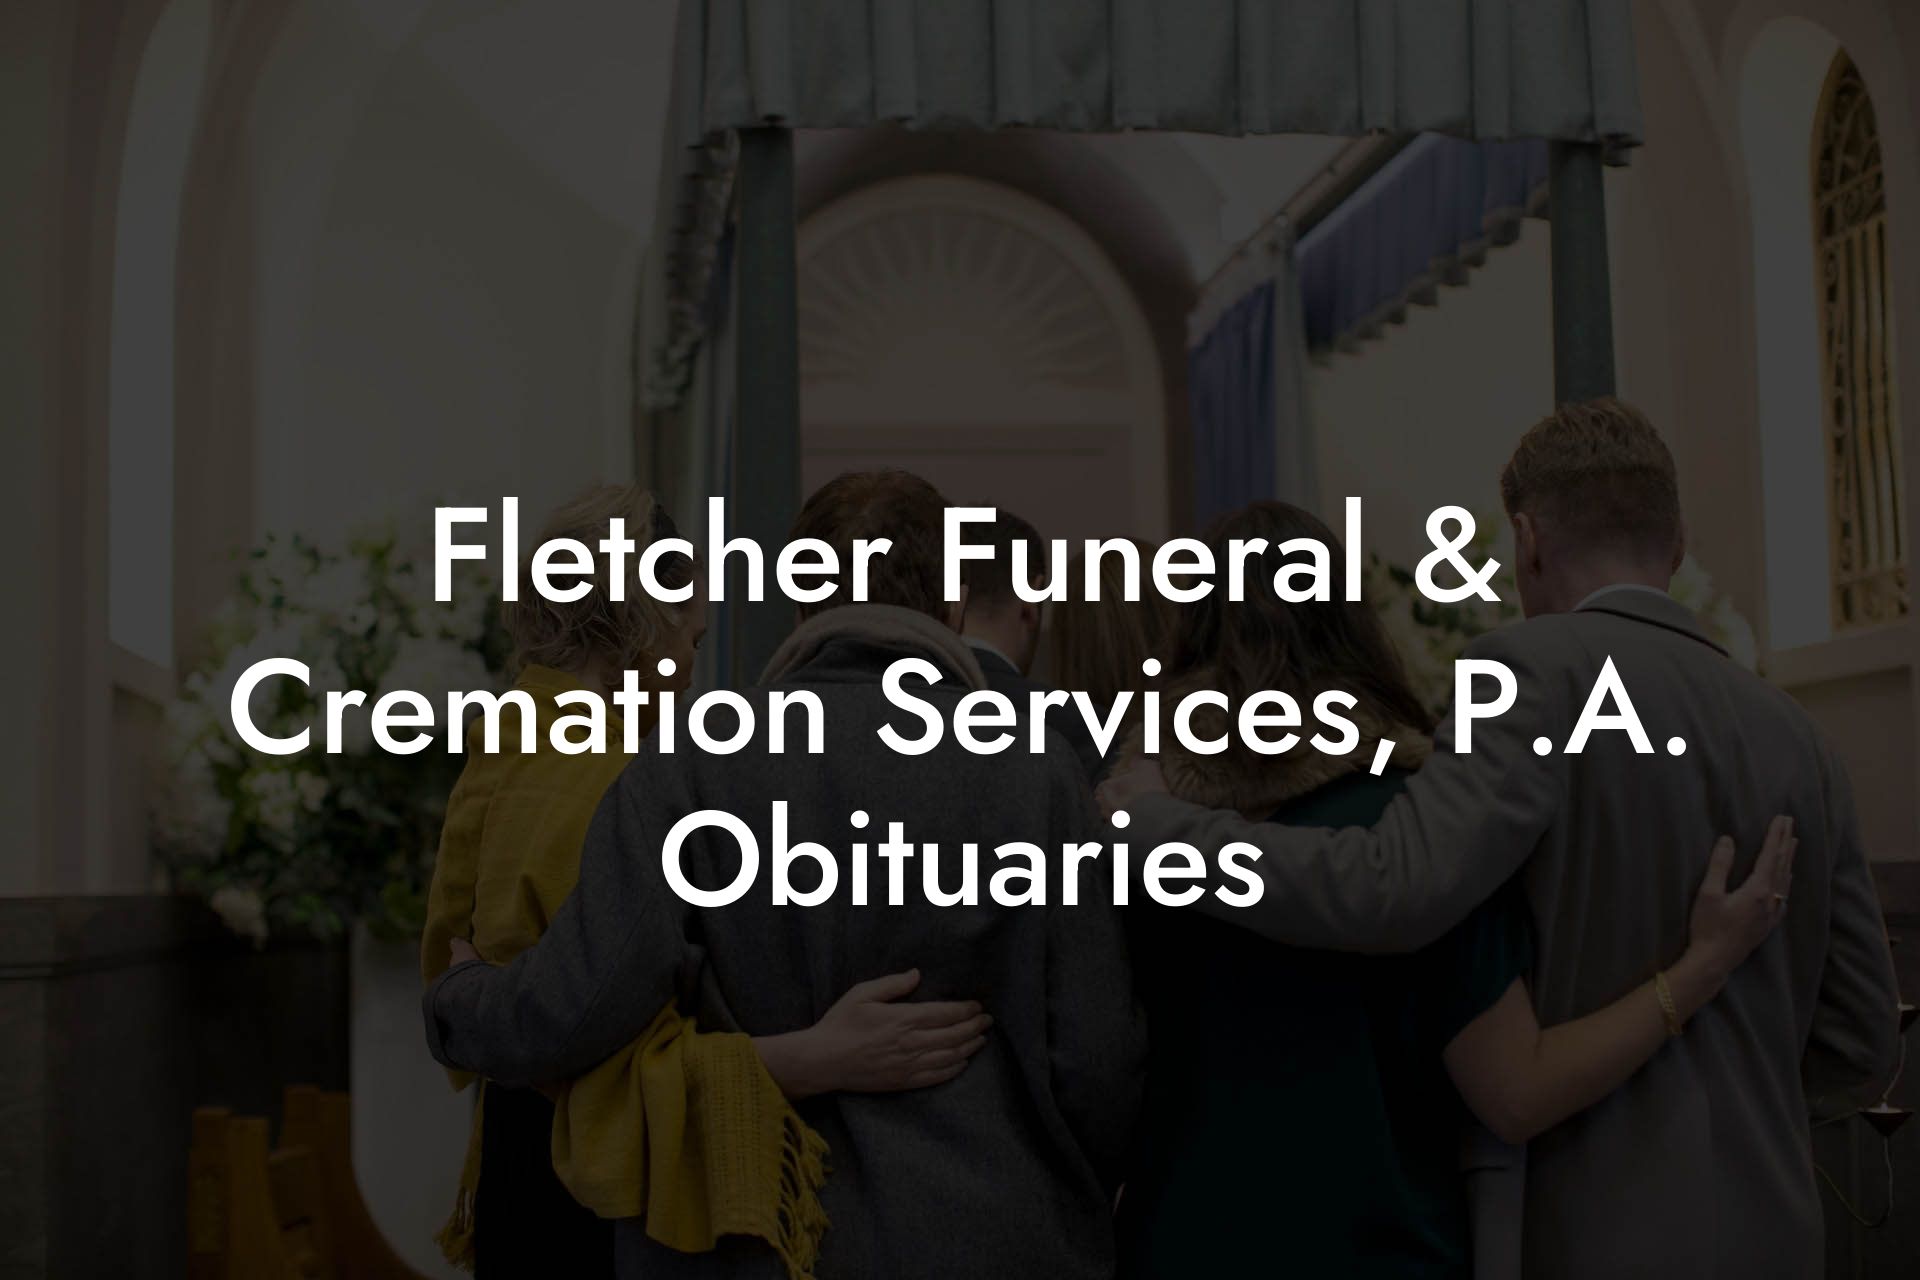 Fletcher Funeral & Cremation Services, P.A. Obituaries